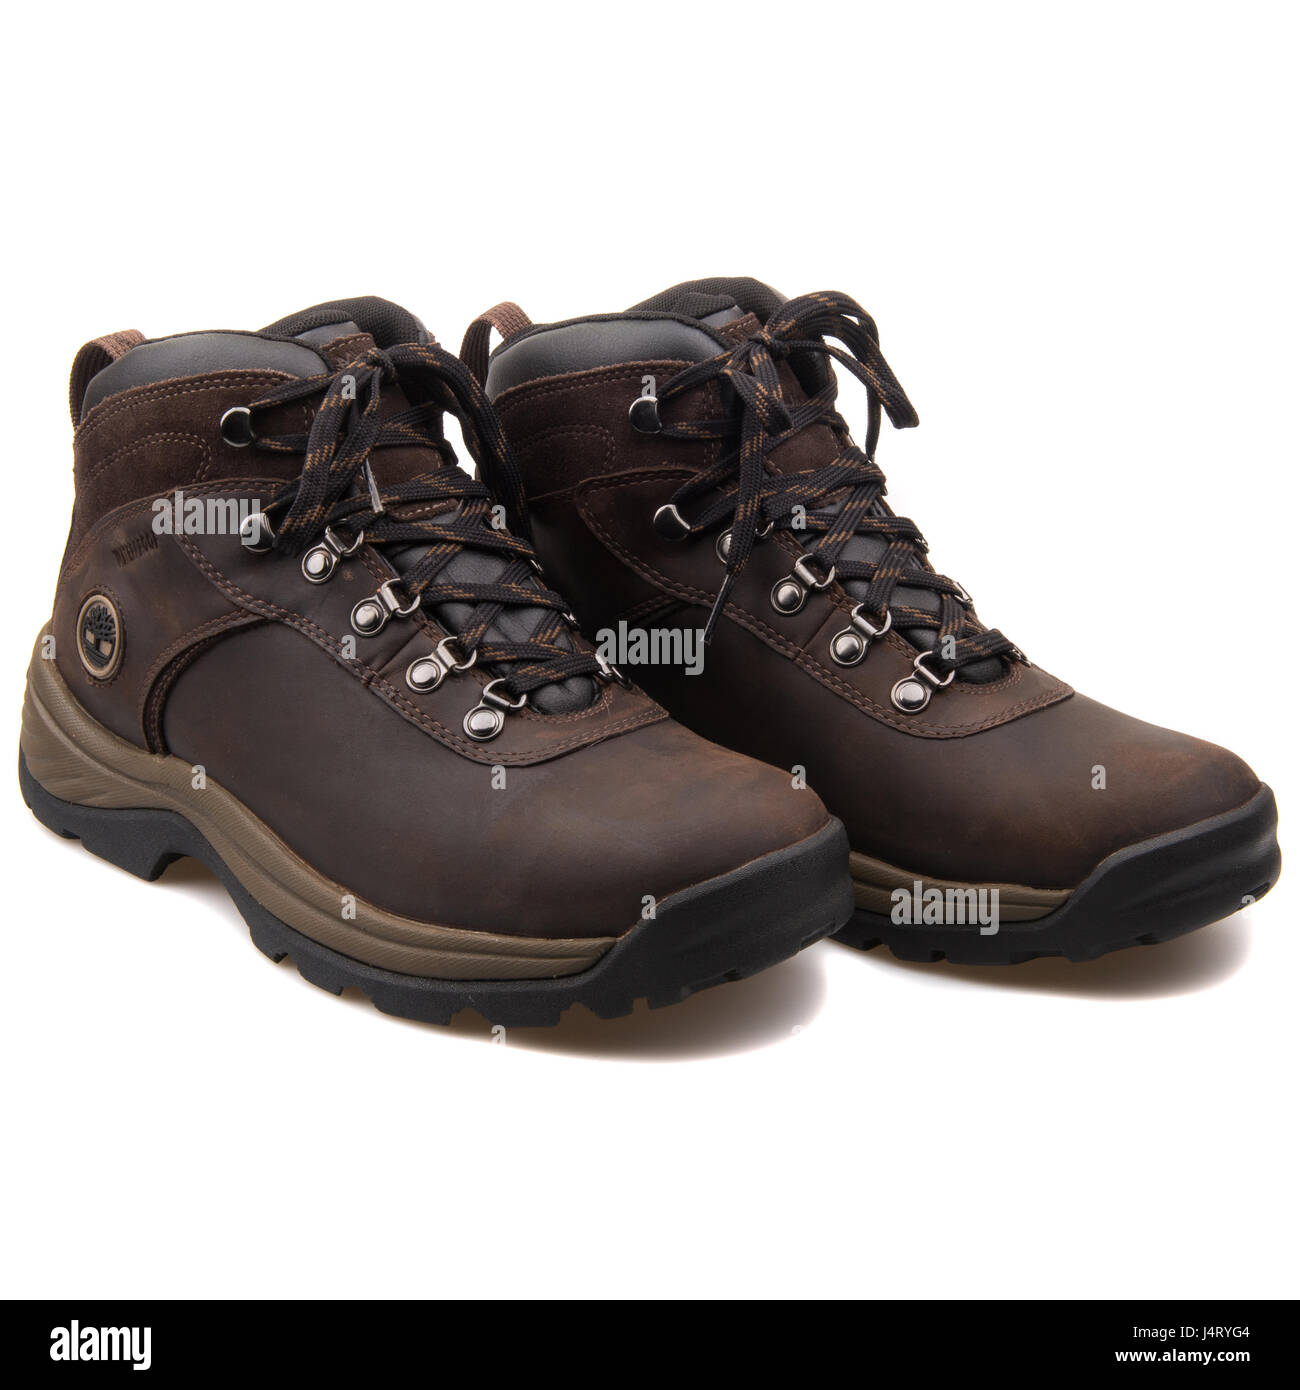 Timberland Flume Waterproof Medium Wide Hiking Leather Boot Dark Stock  Photo - Alamy